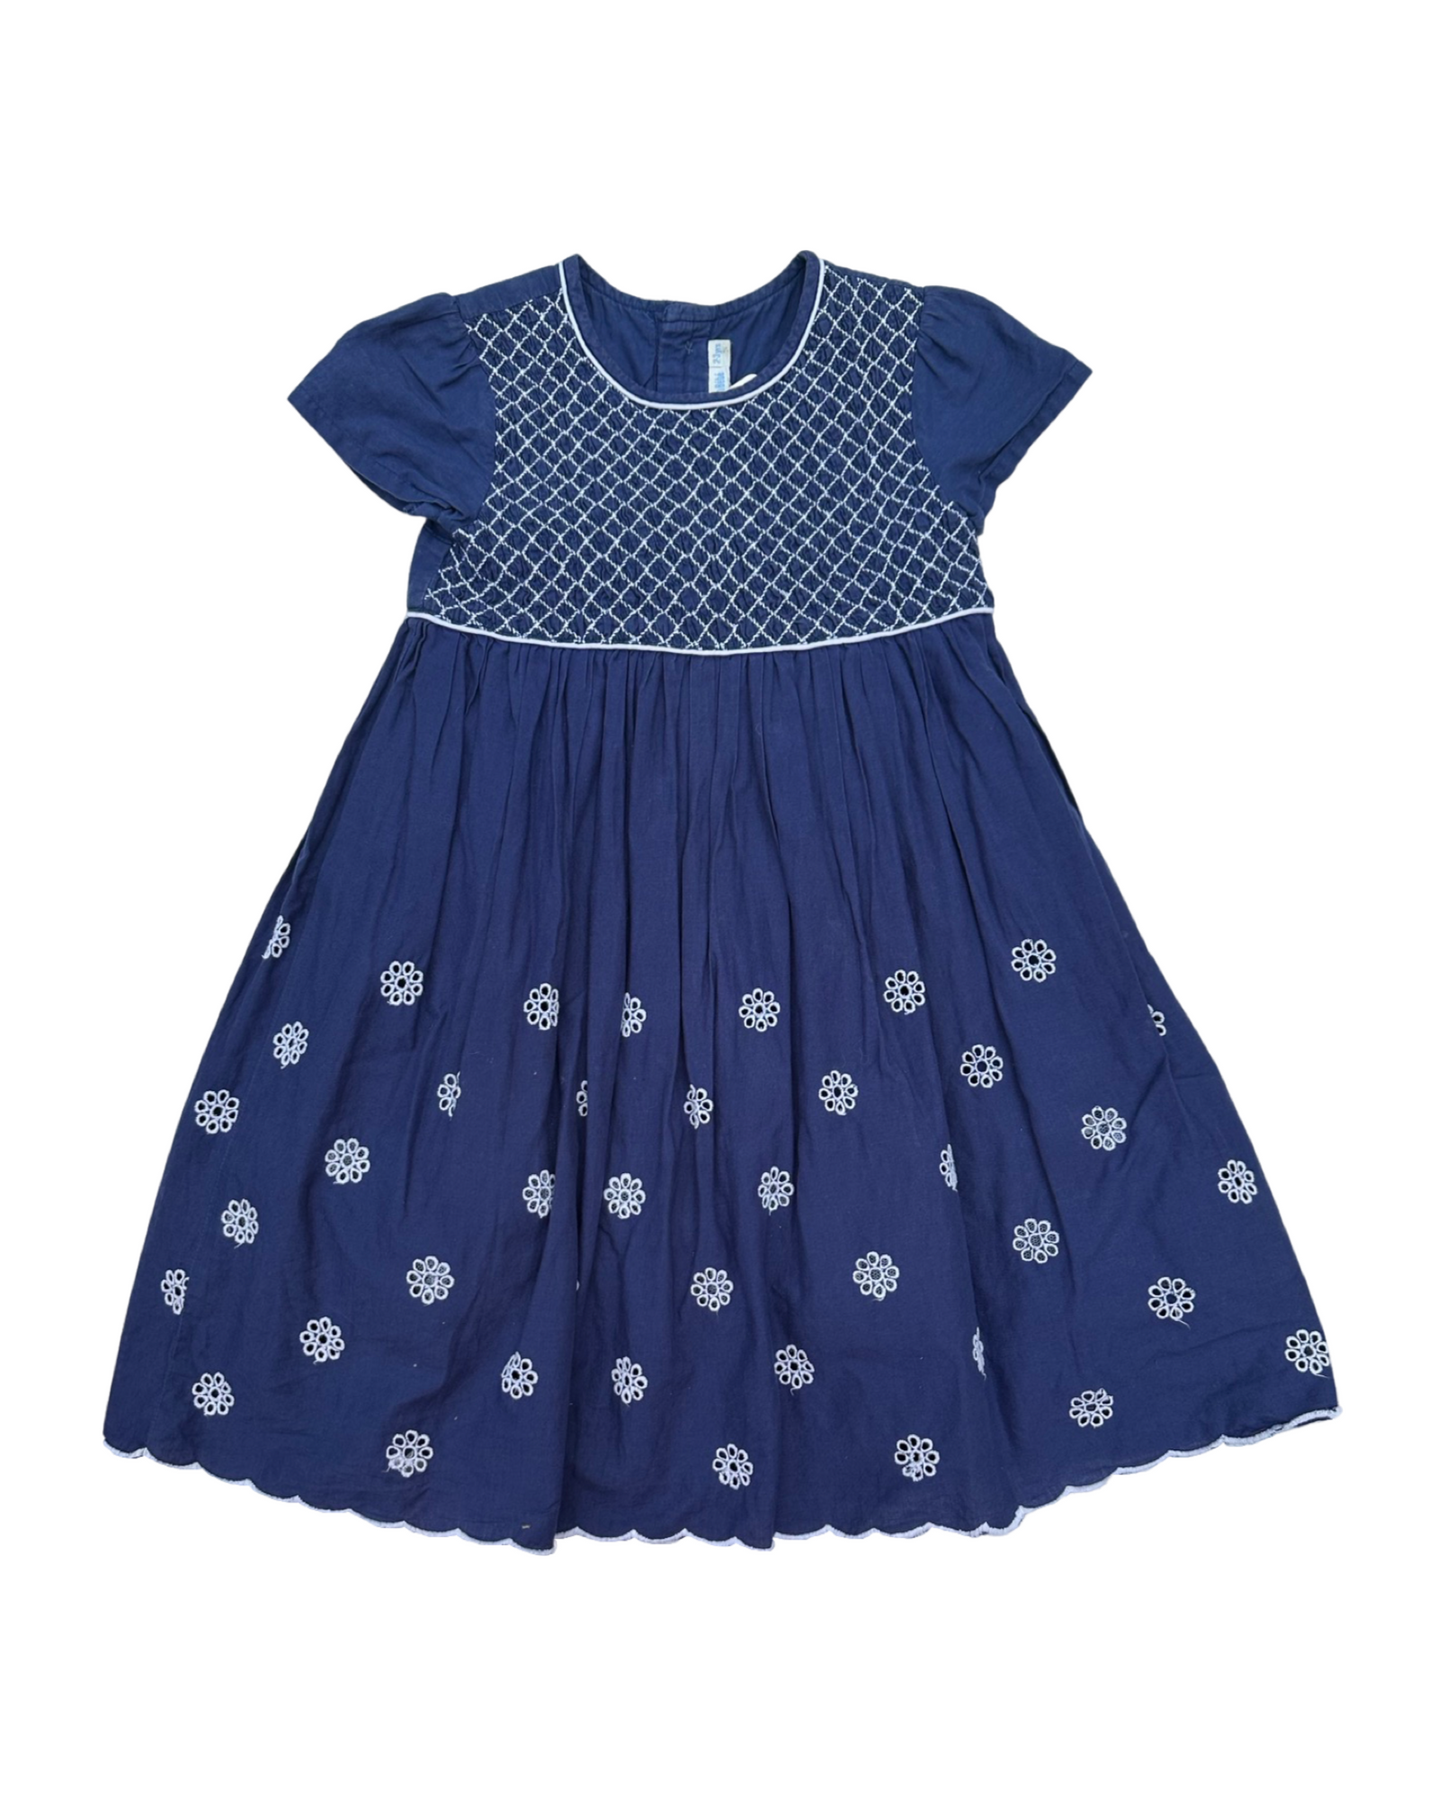 JoJo Maman Bebe blue floral dress (size 2-3yrs)